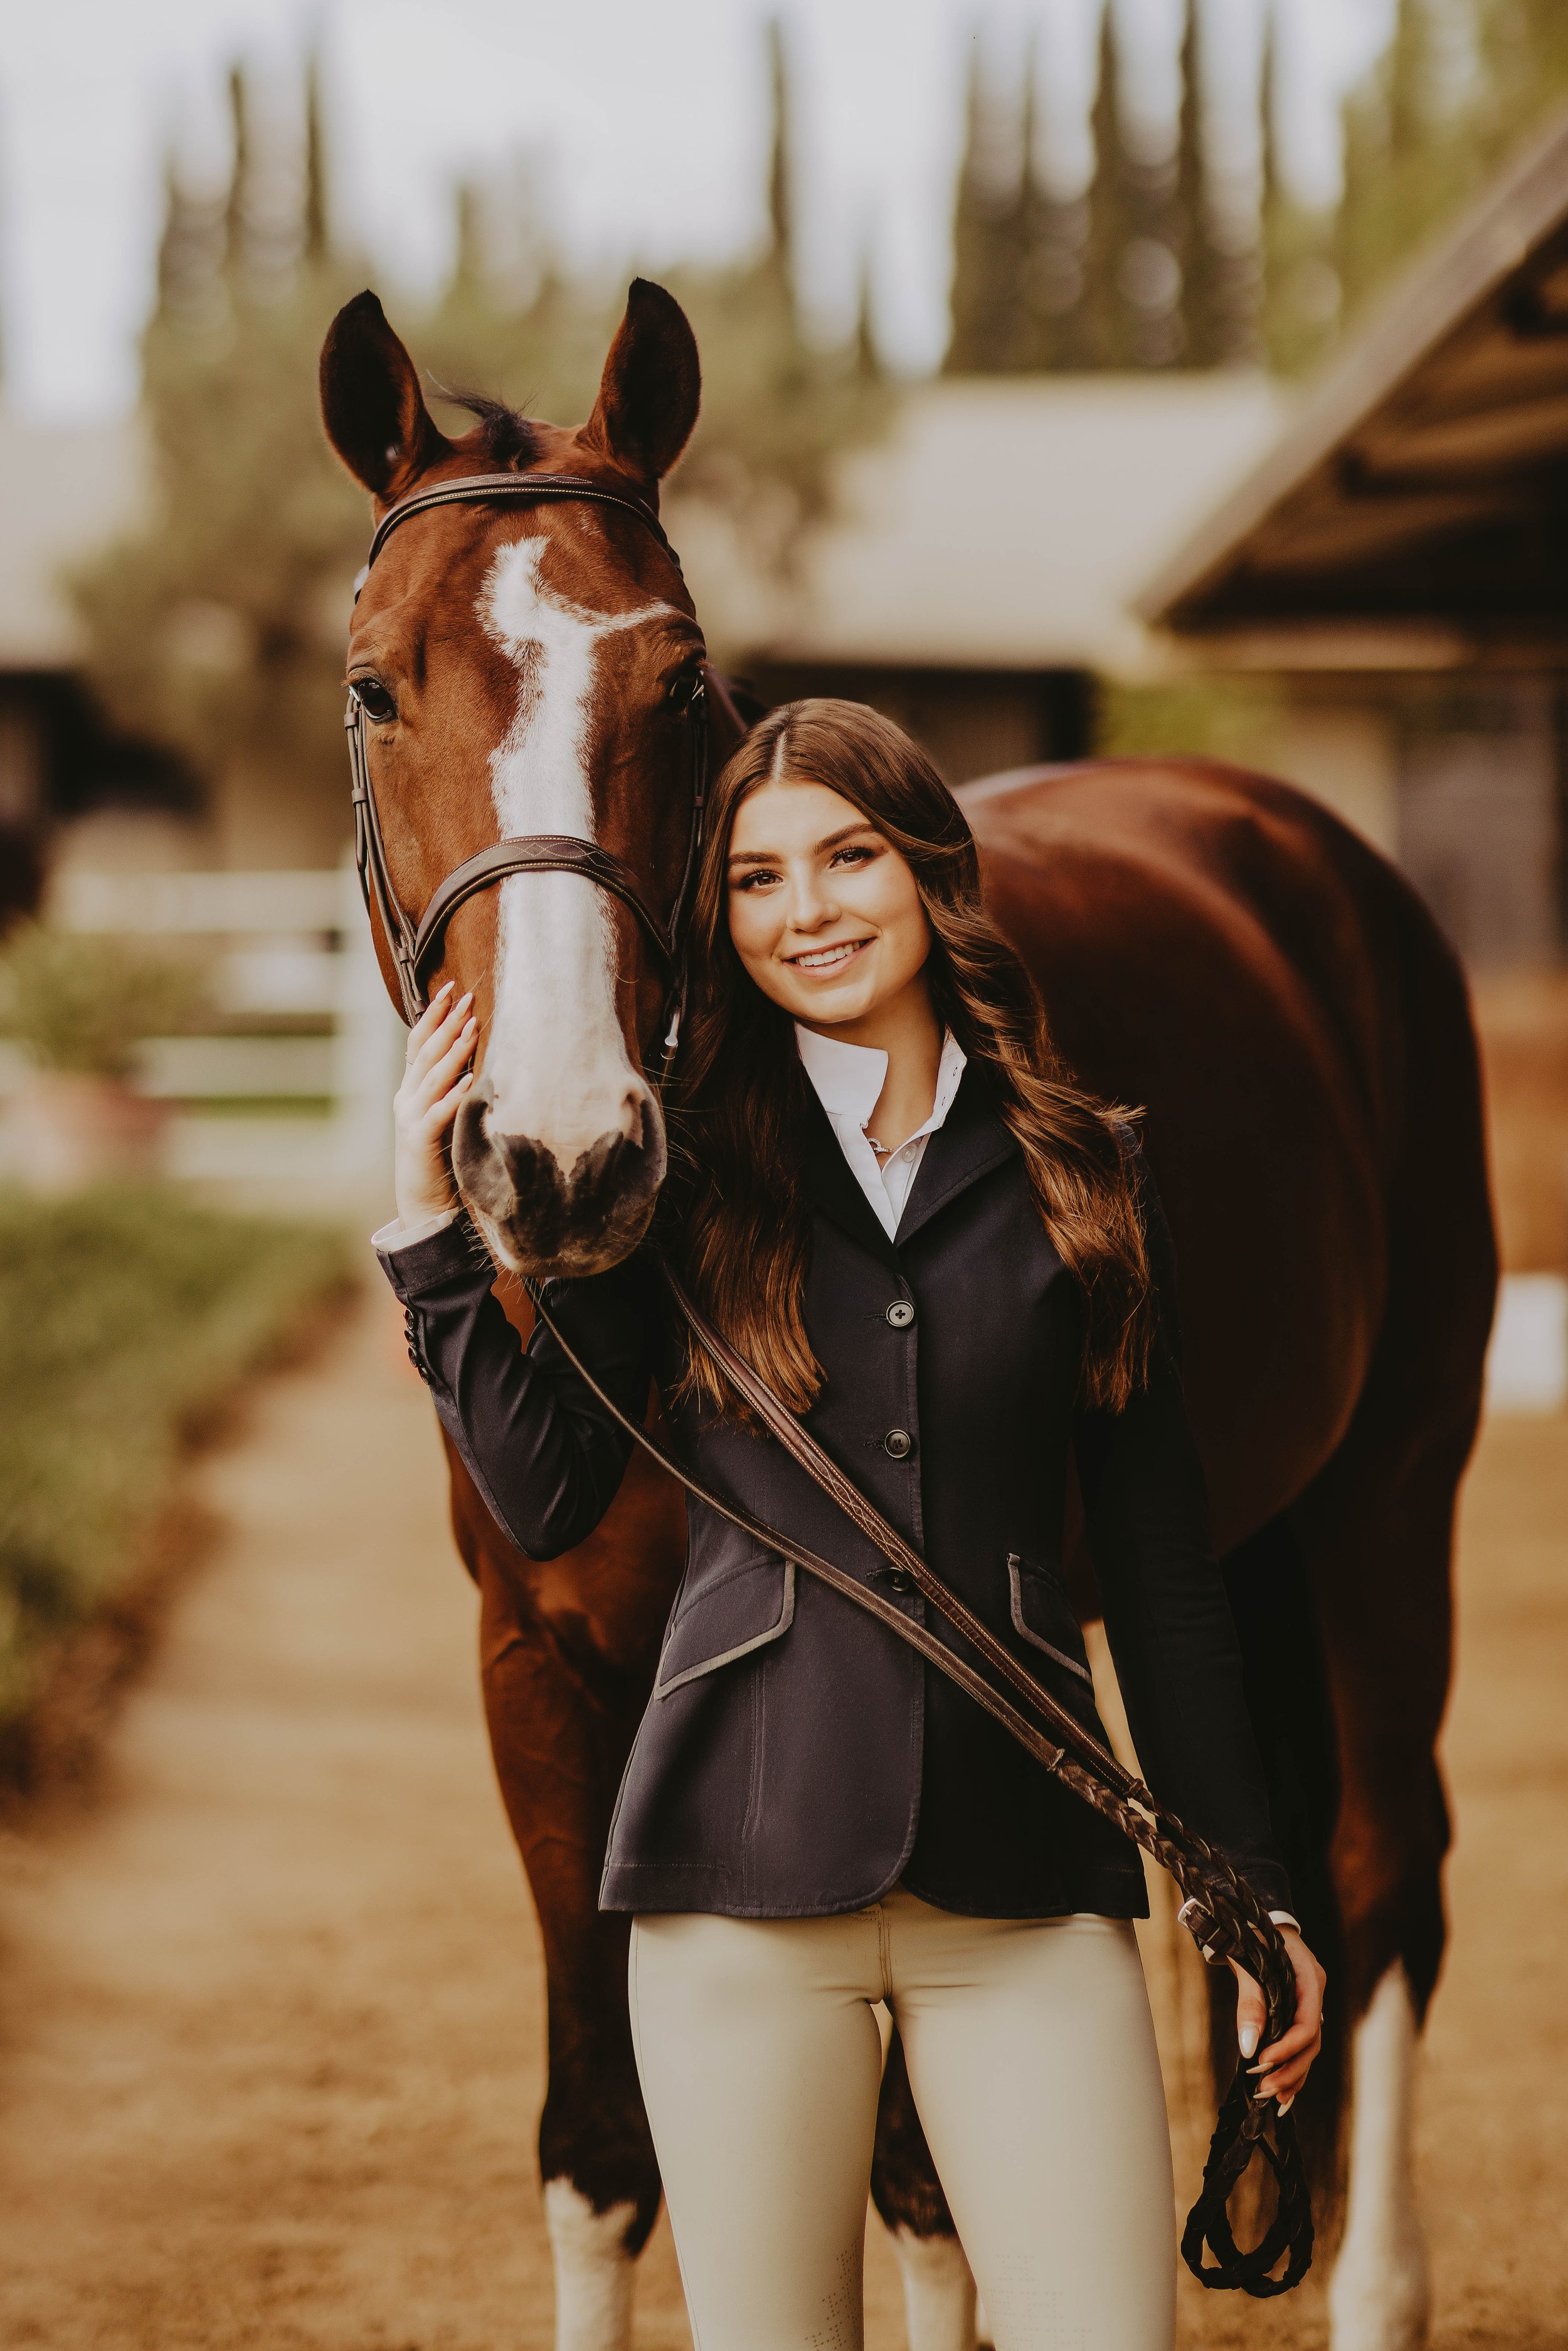  senior photos with a horse riding outfit 